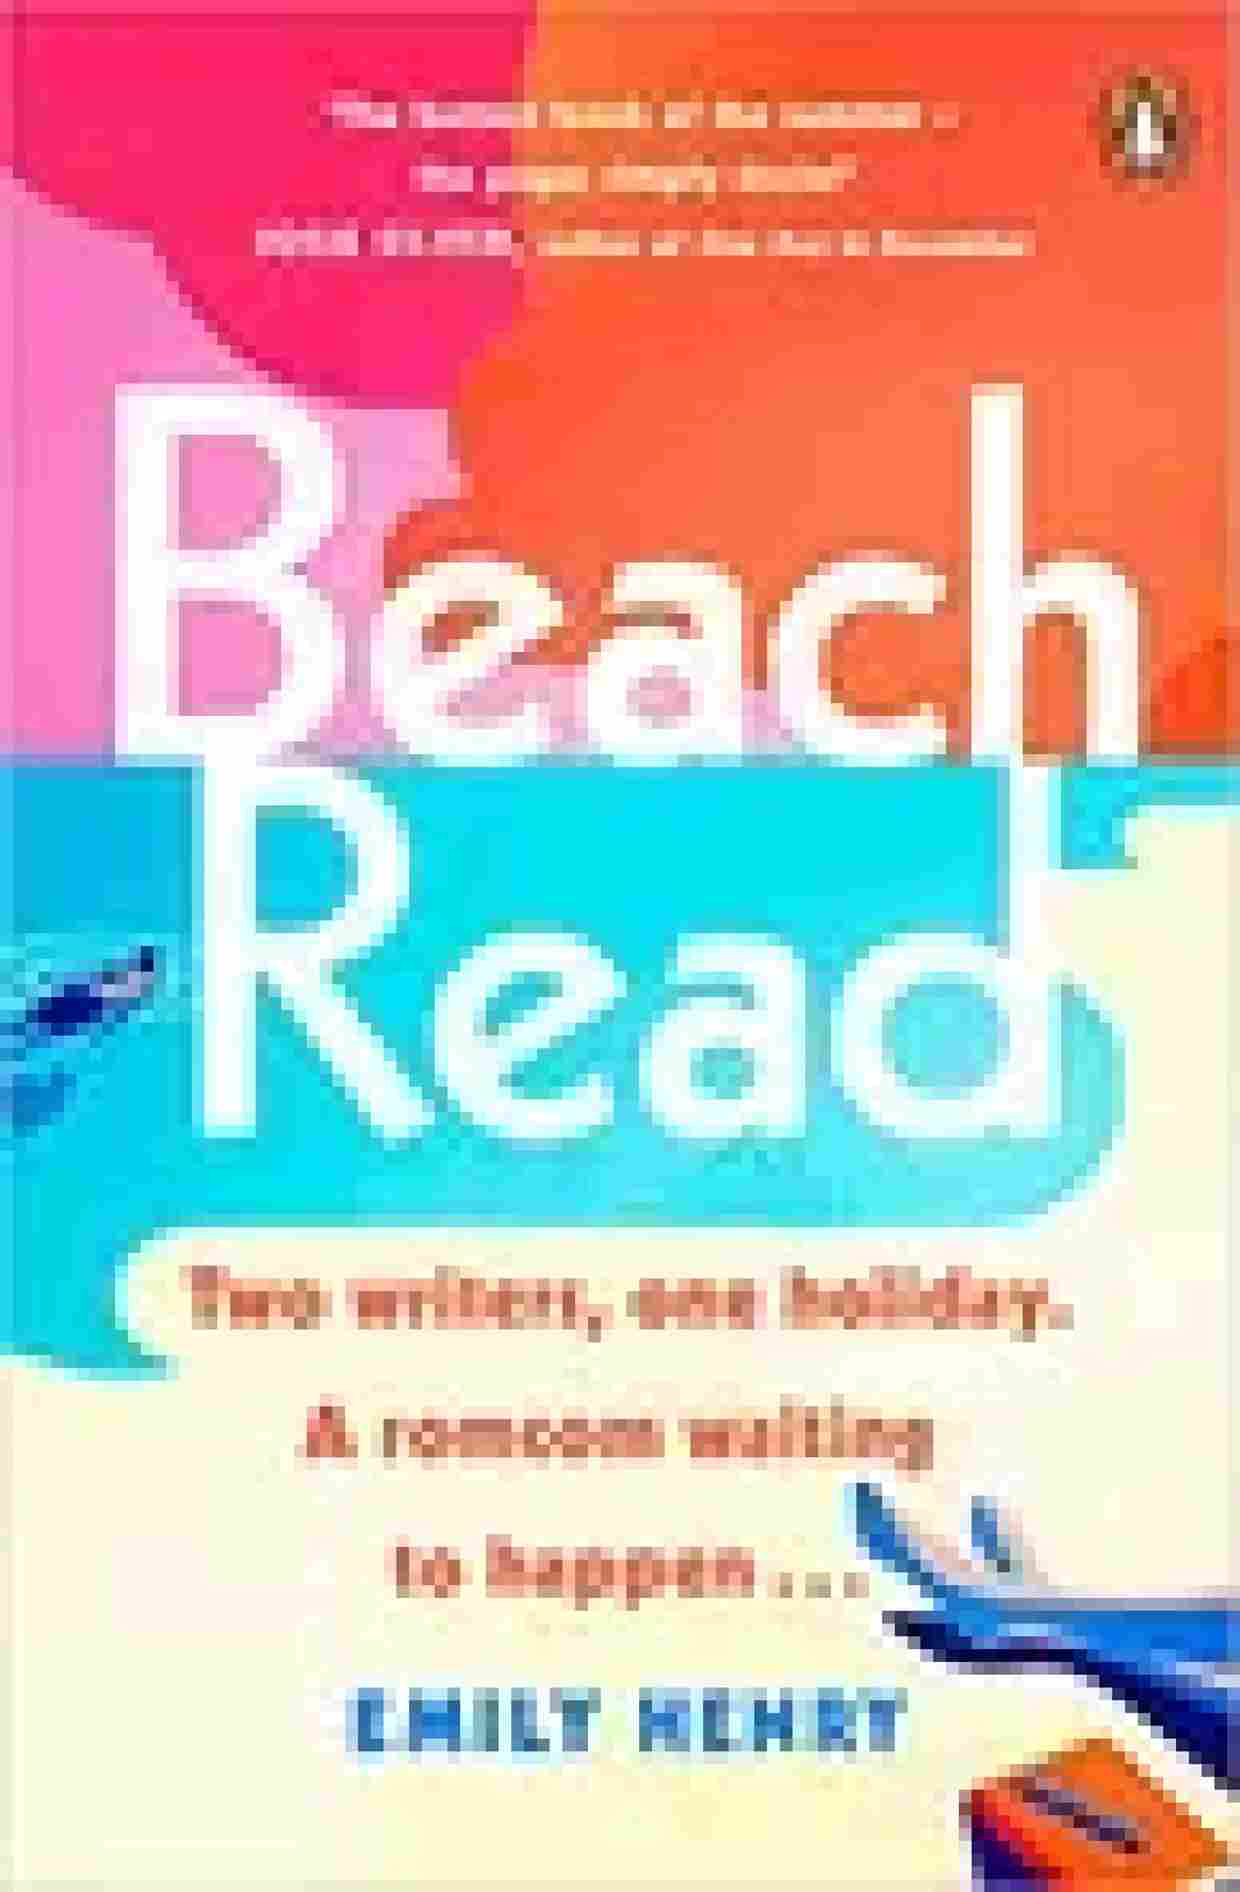 Beach Read (Paperback)-Emily Henry